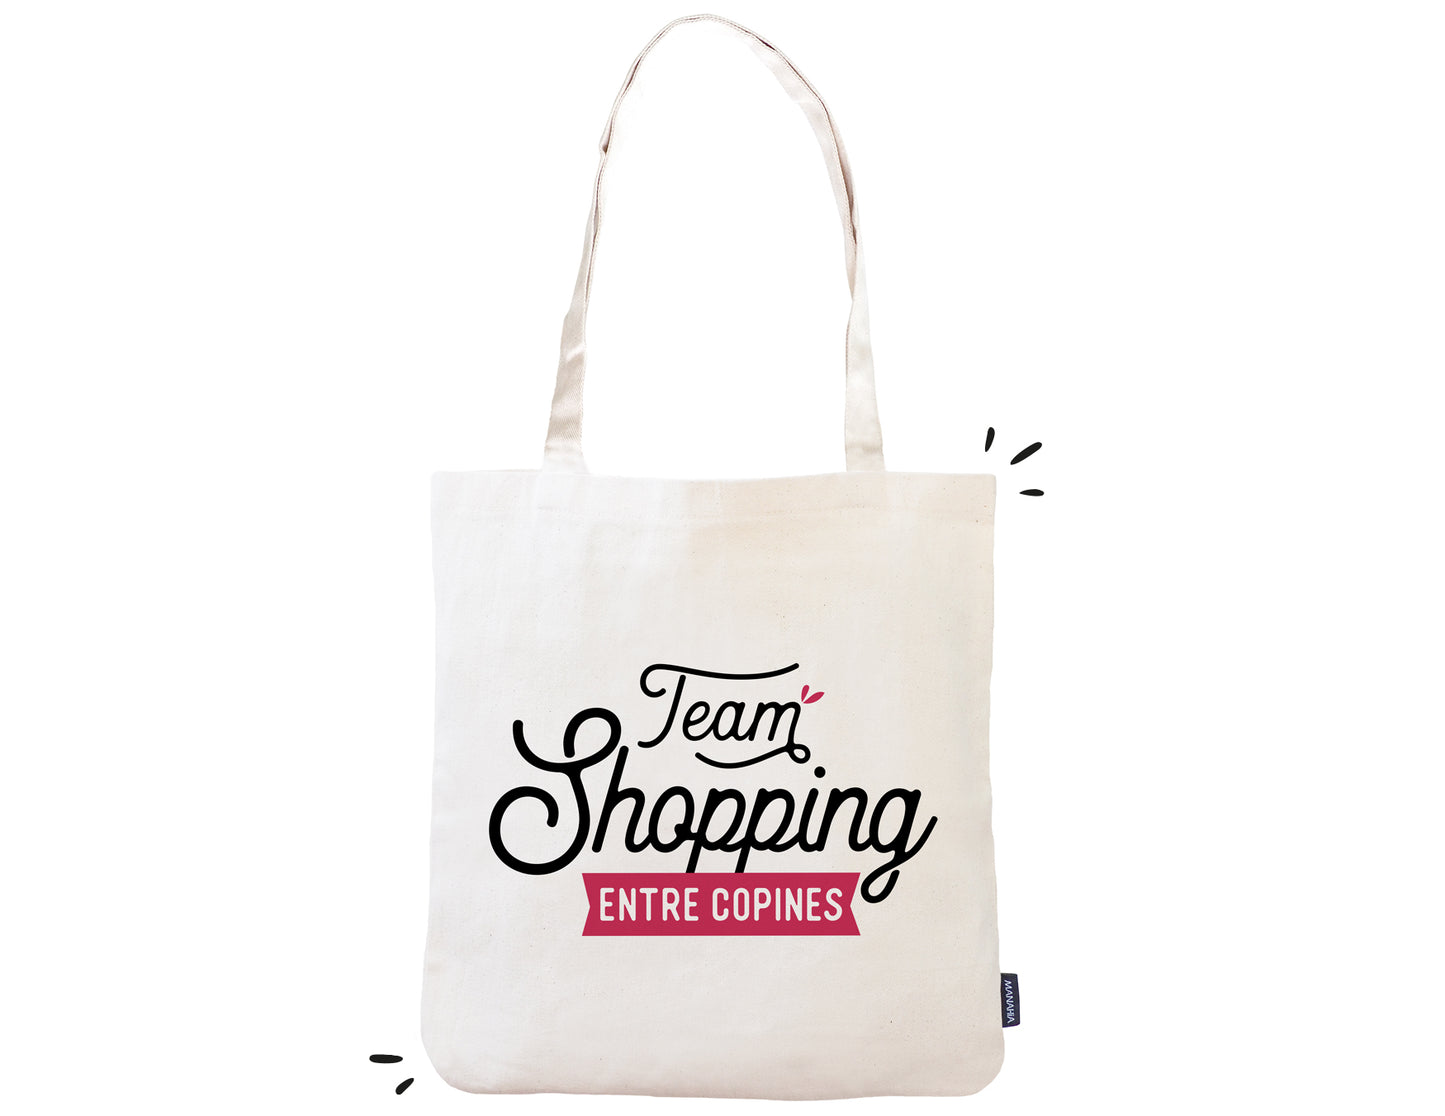 Totebag - Team shopping entre copines